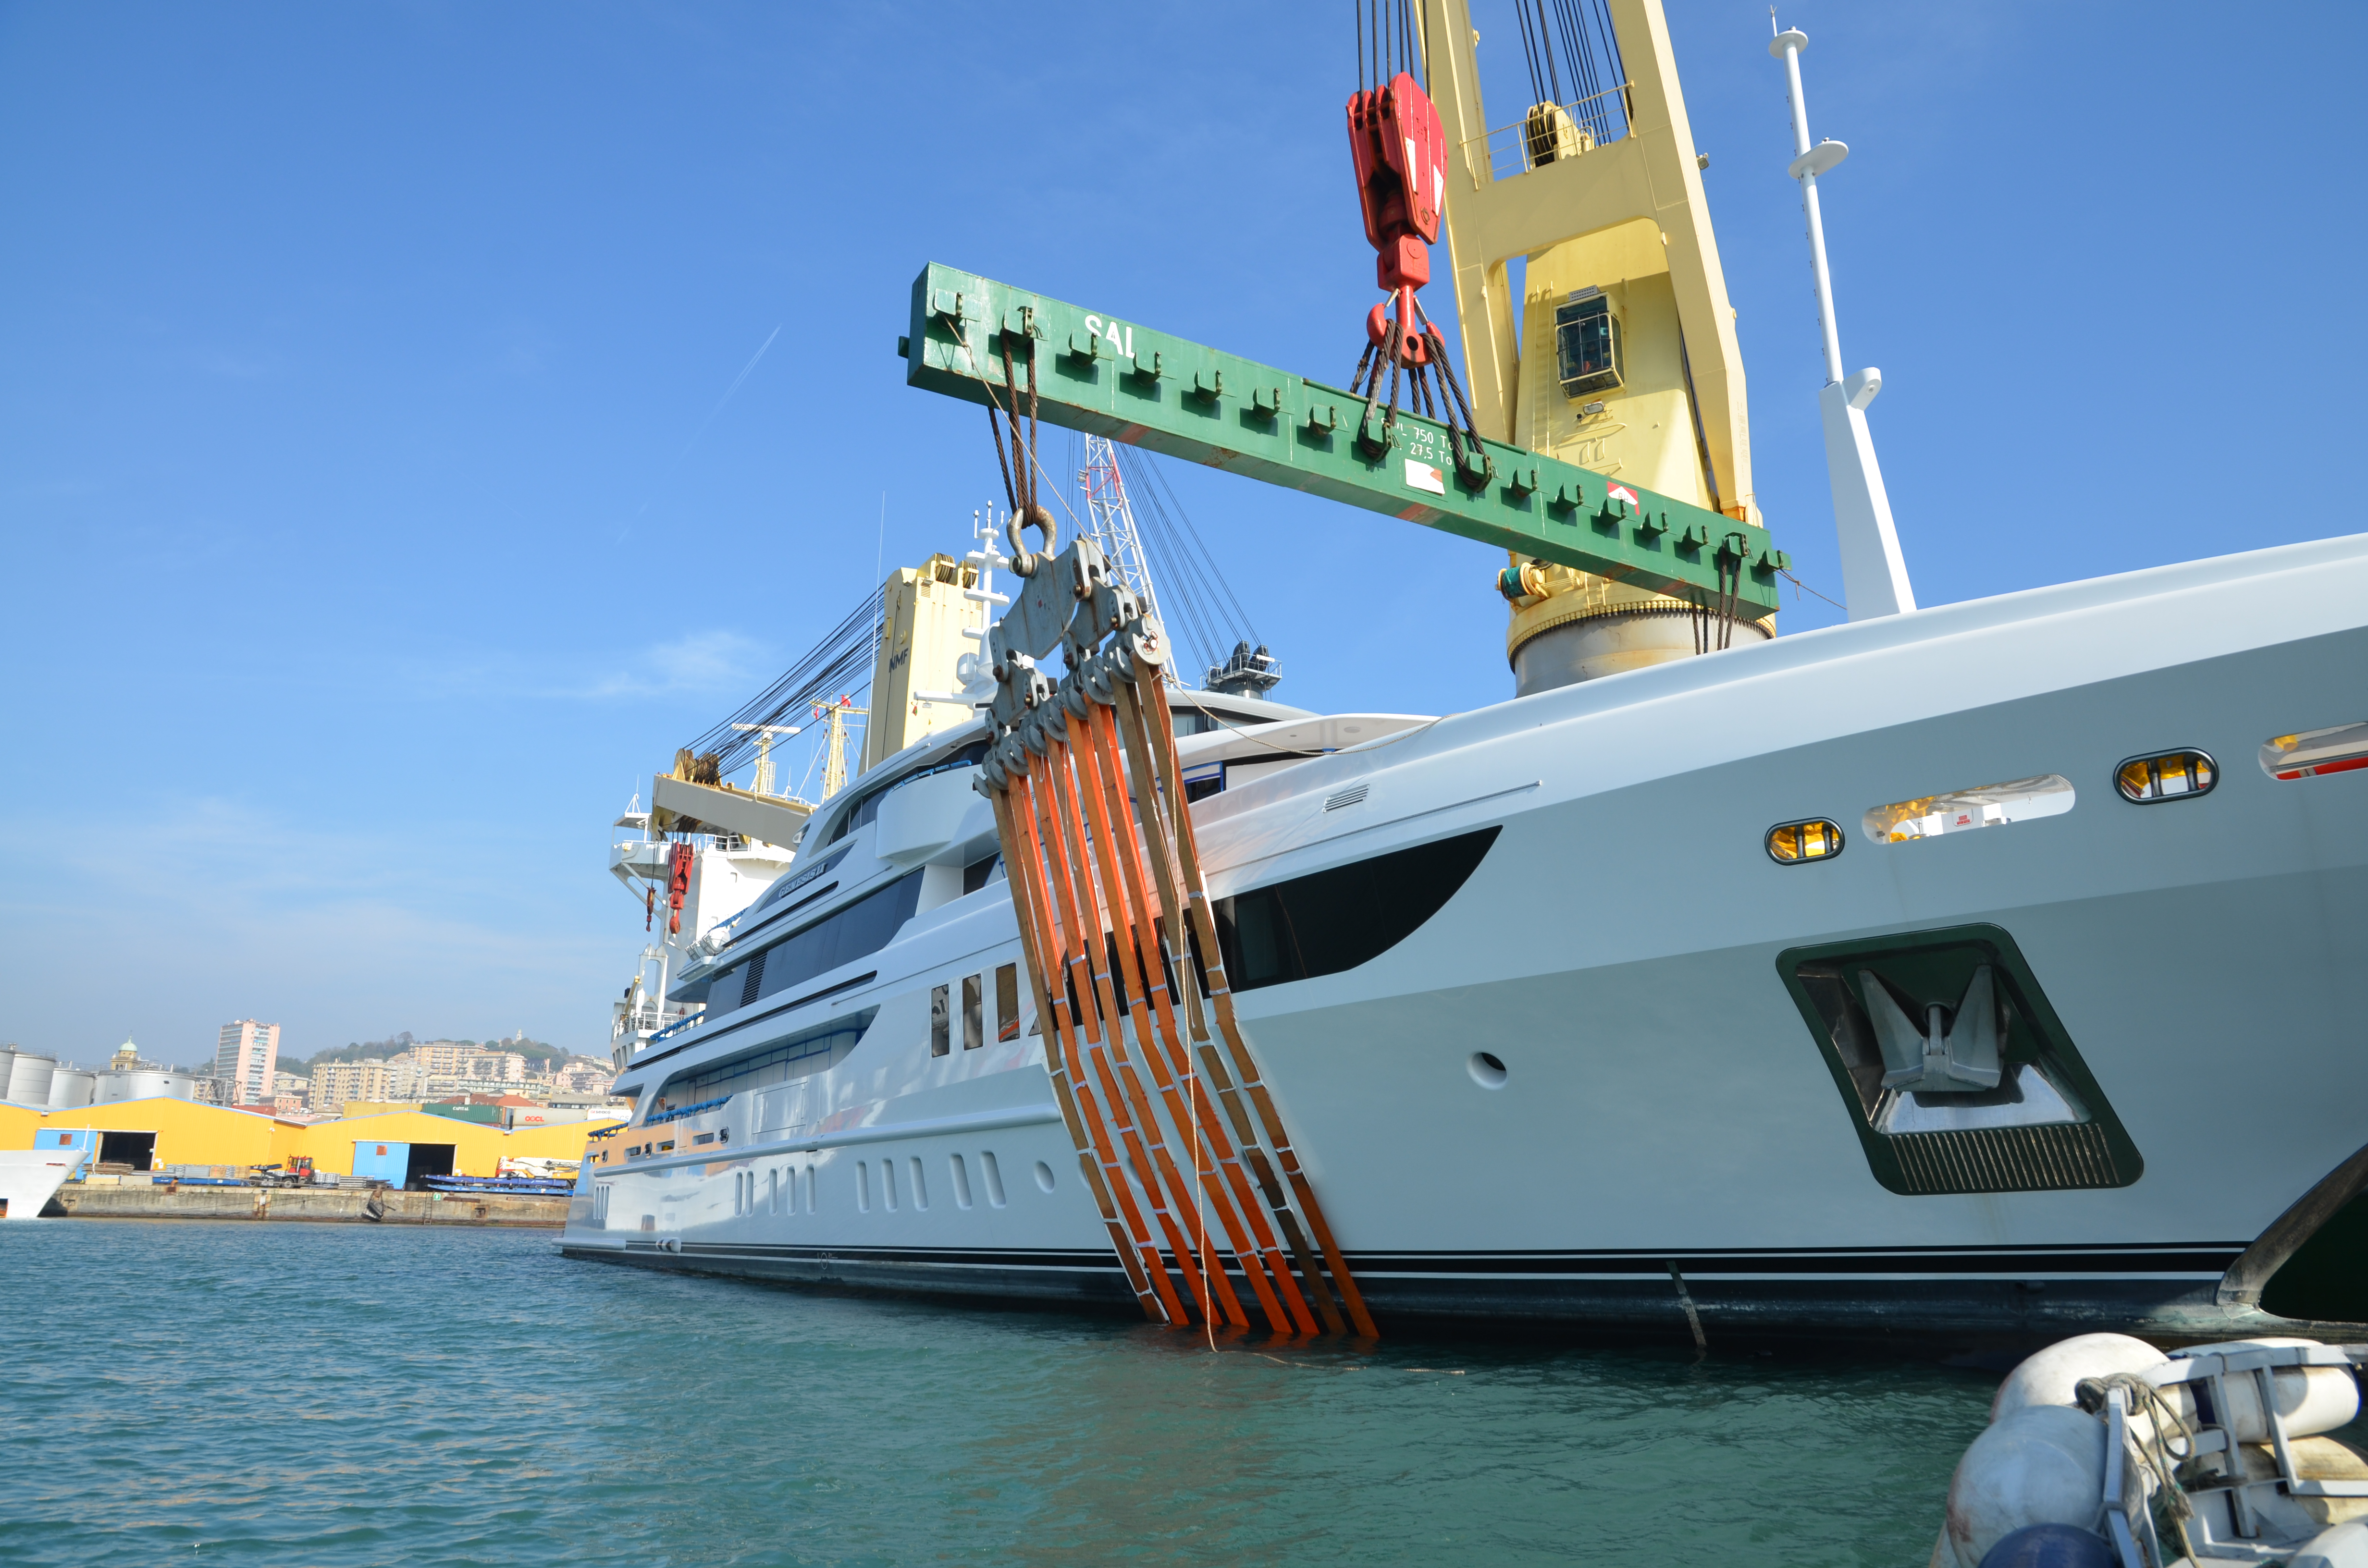 Superyacht transport background image